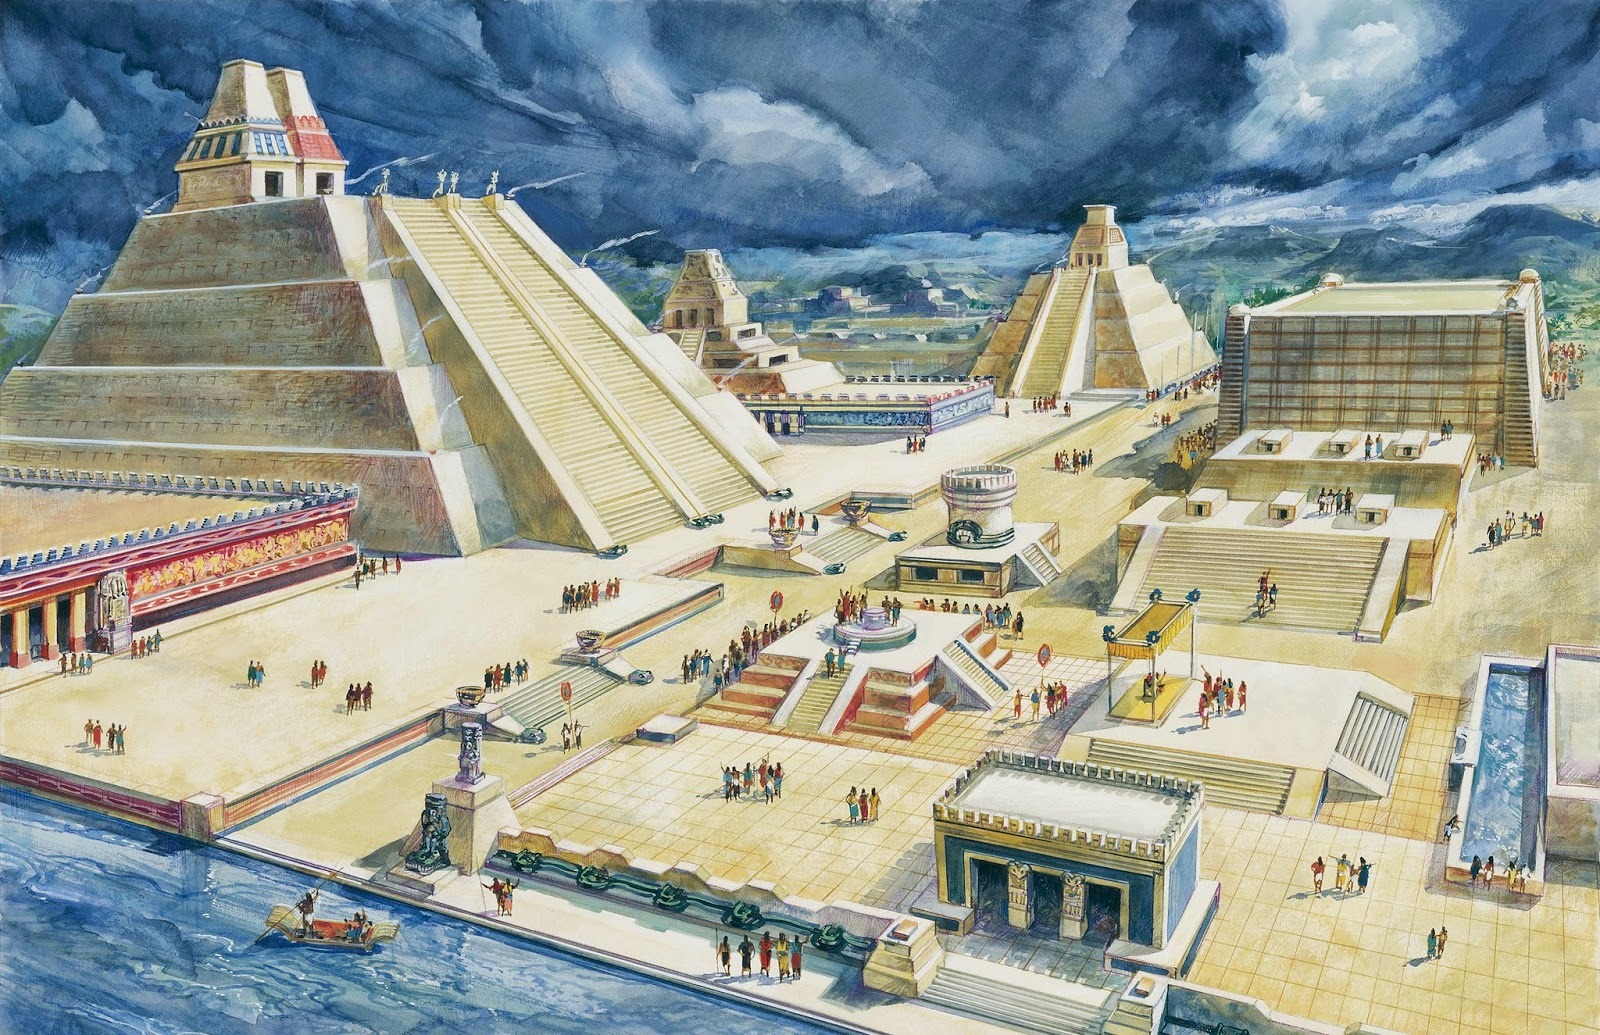 La gran Tenochtitlán